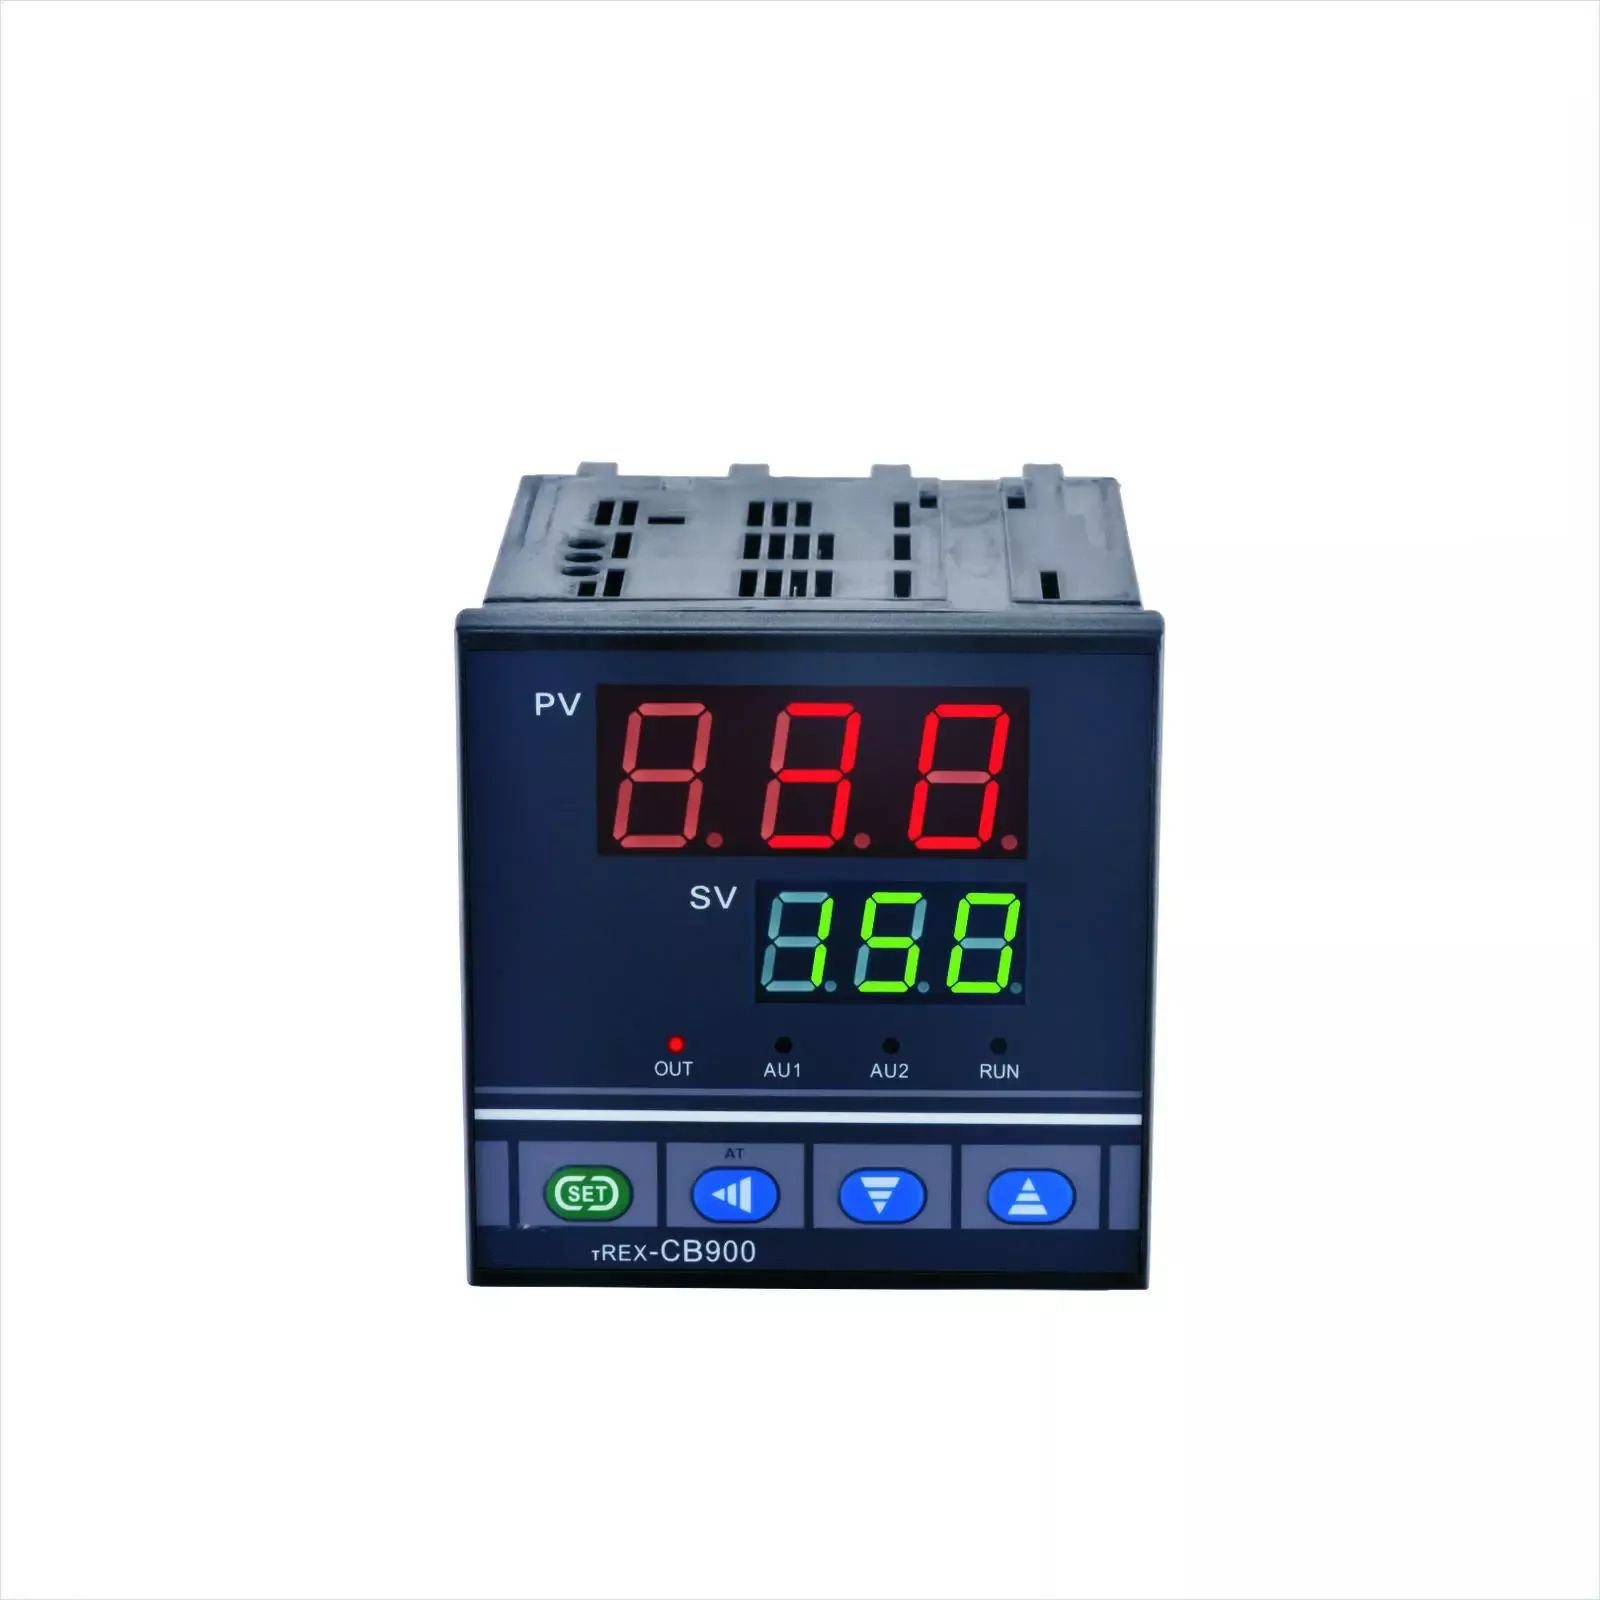 CB900 intelligent temperature control instrument Vacorda fuzzy control oven